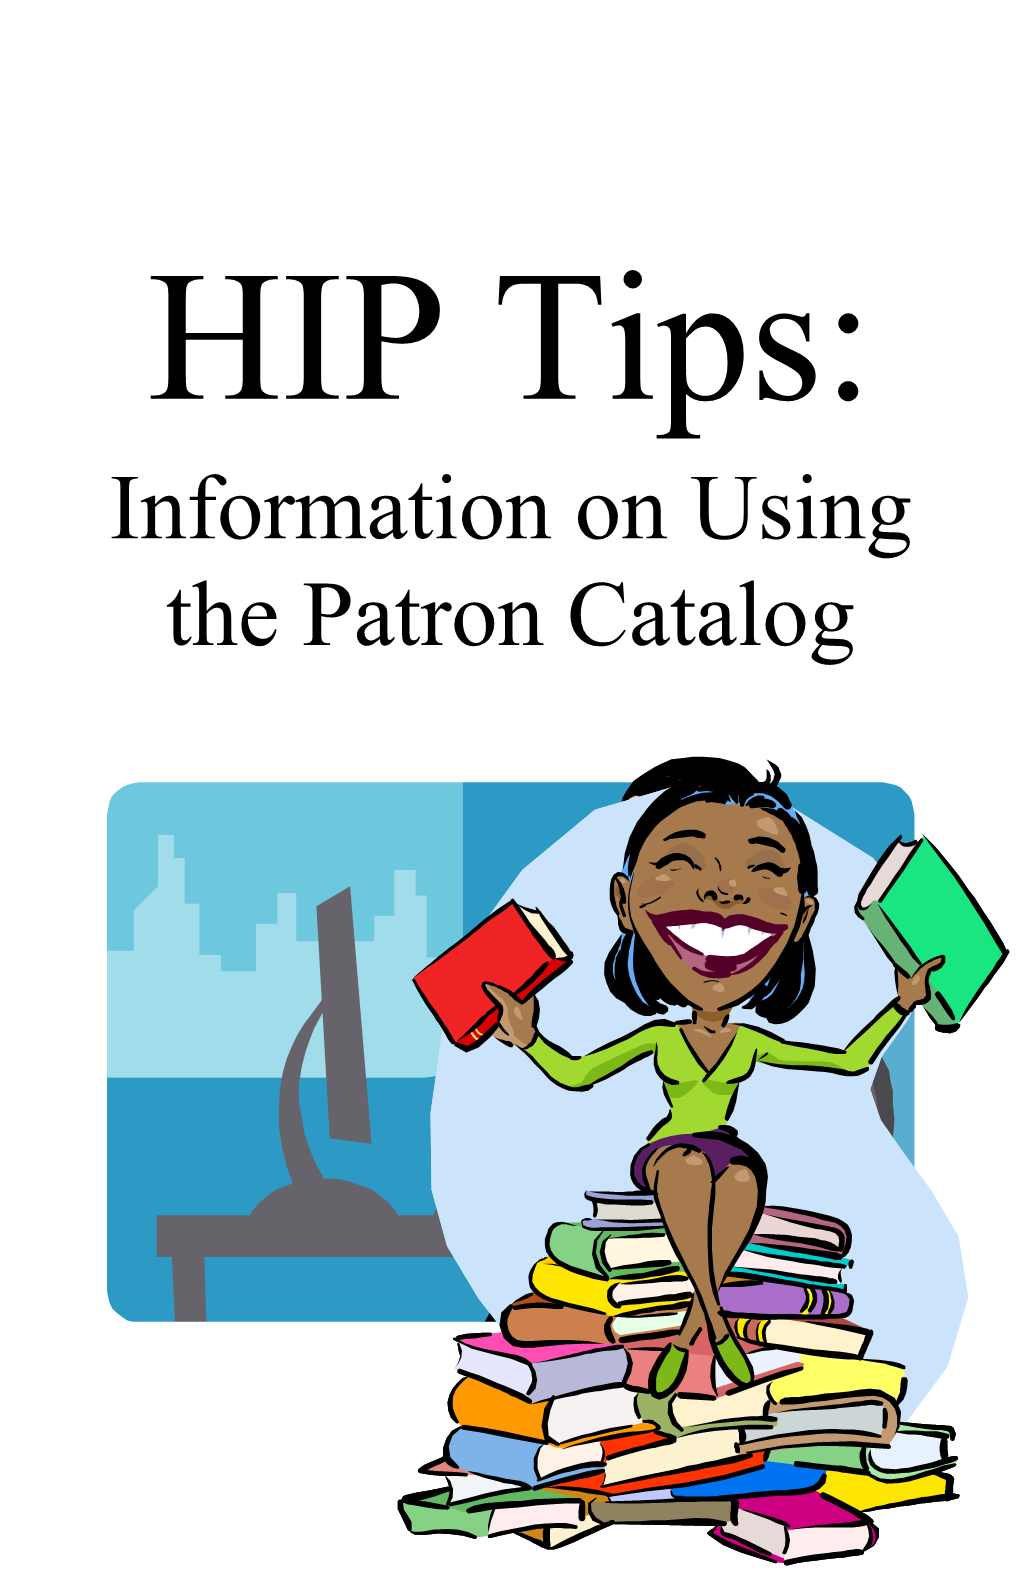 Horizon Information Portal (HIP) Tips